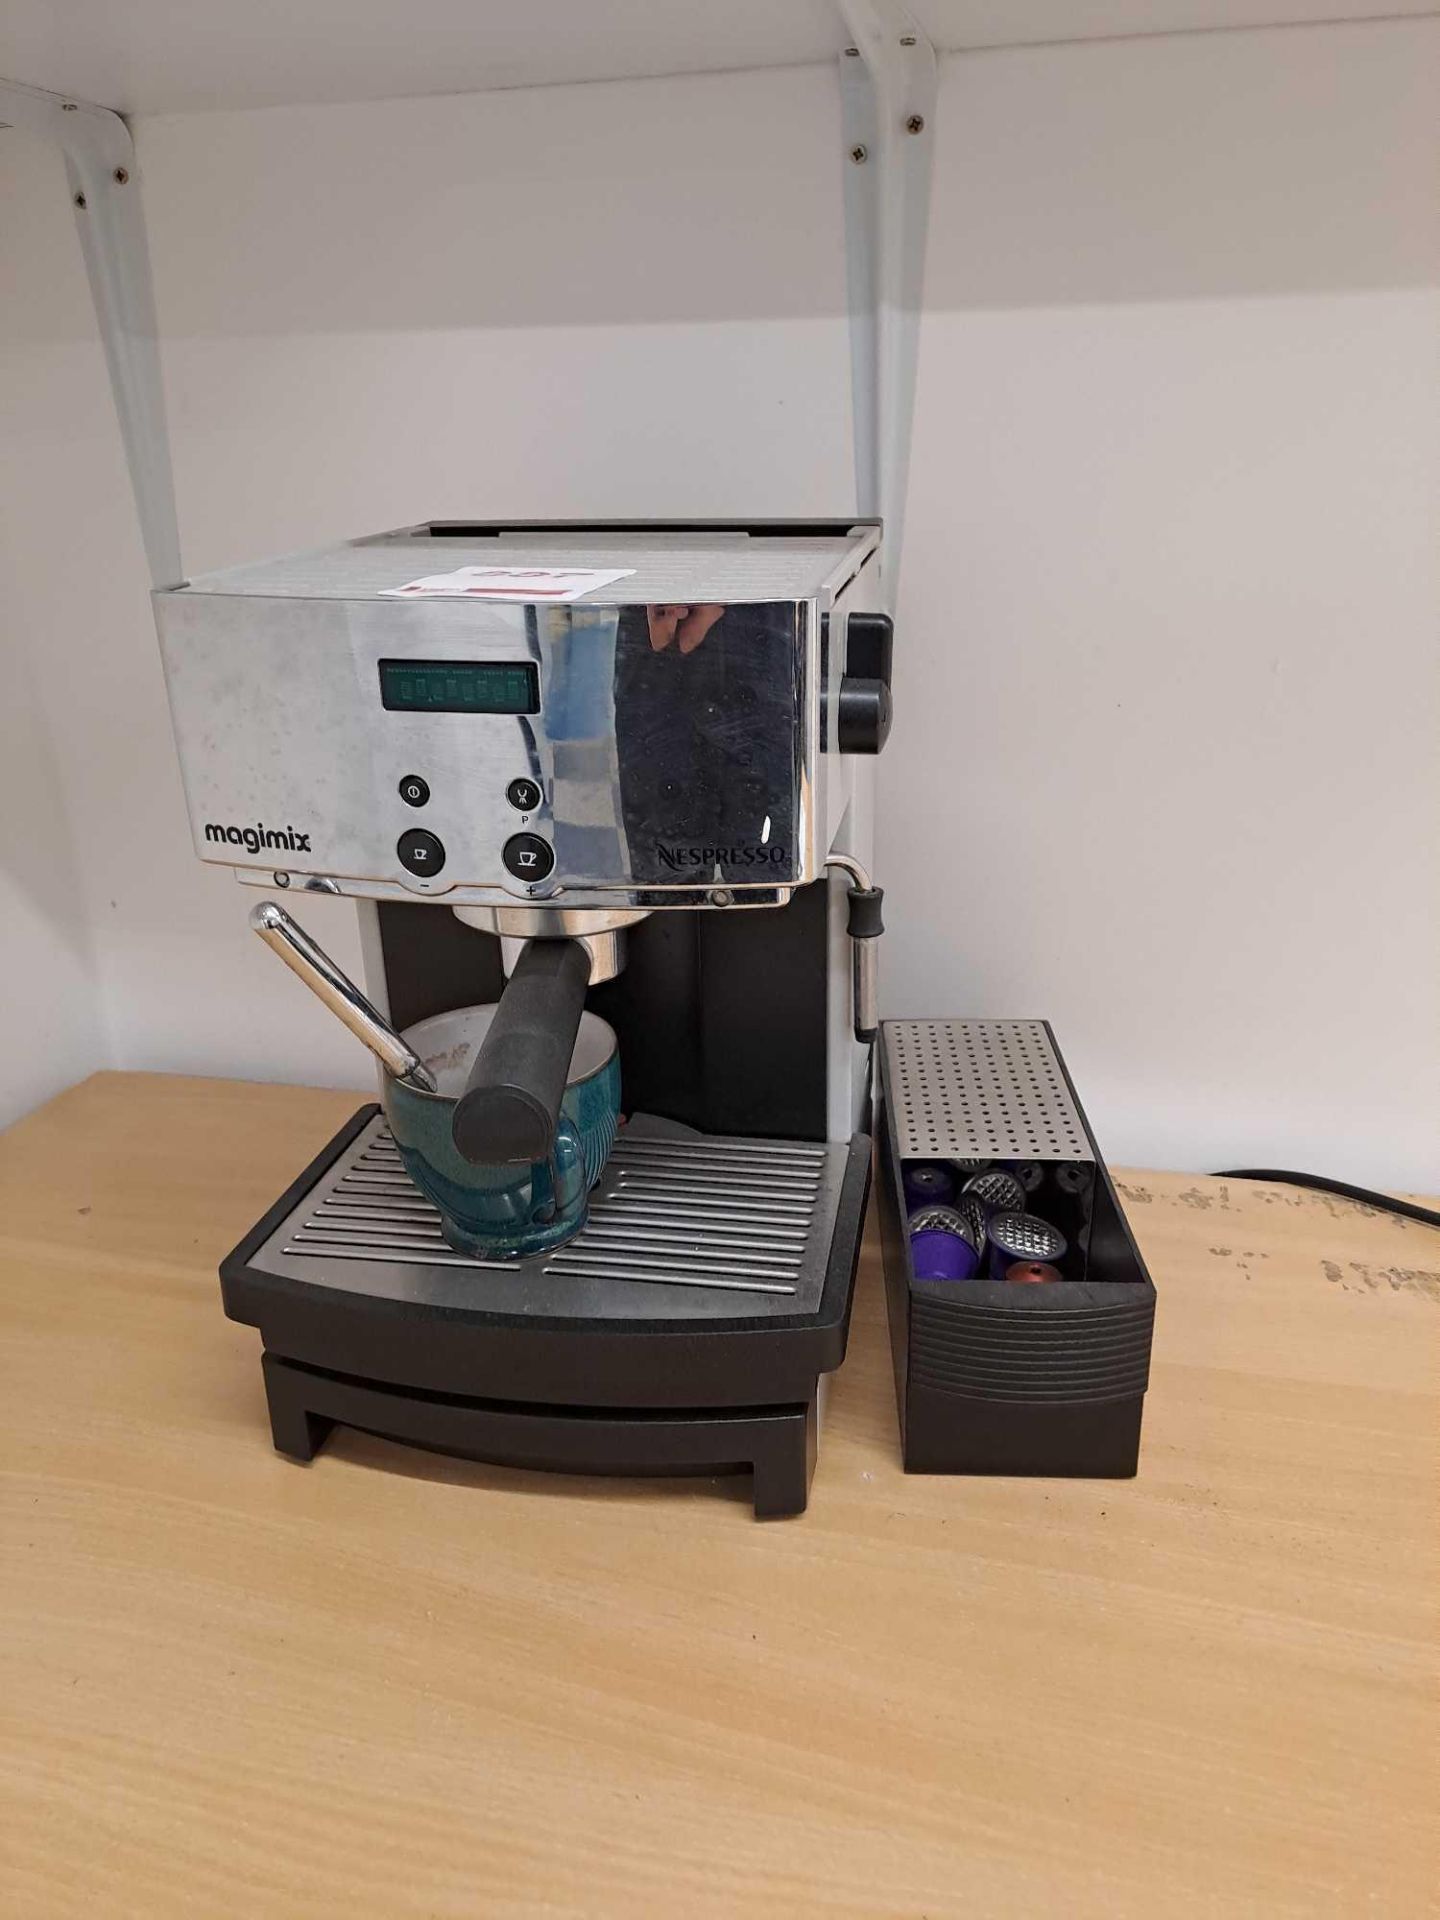 Nespresso Magimix 240v coffee machine